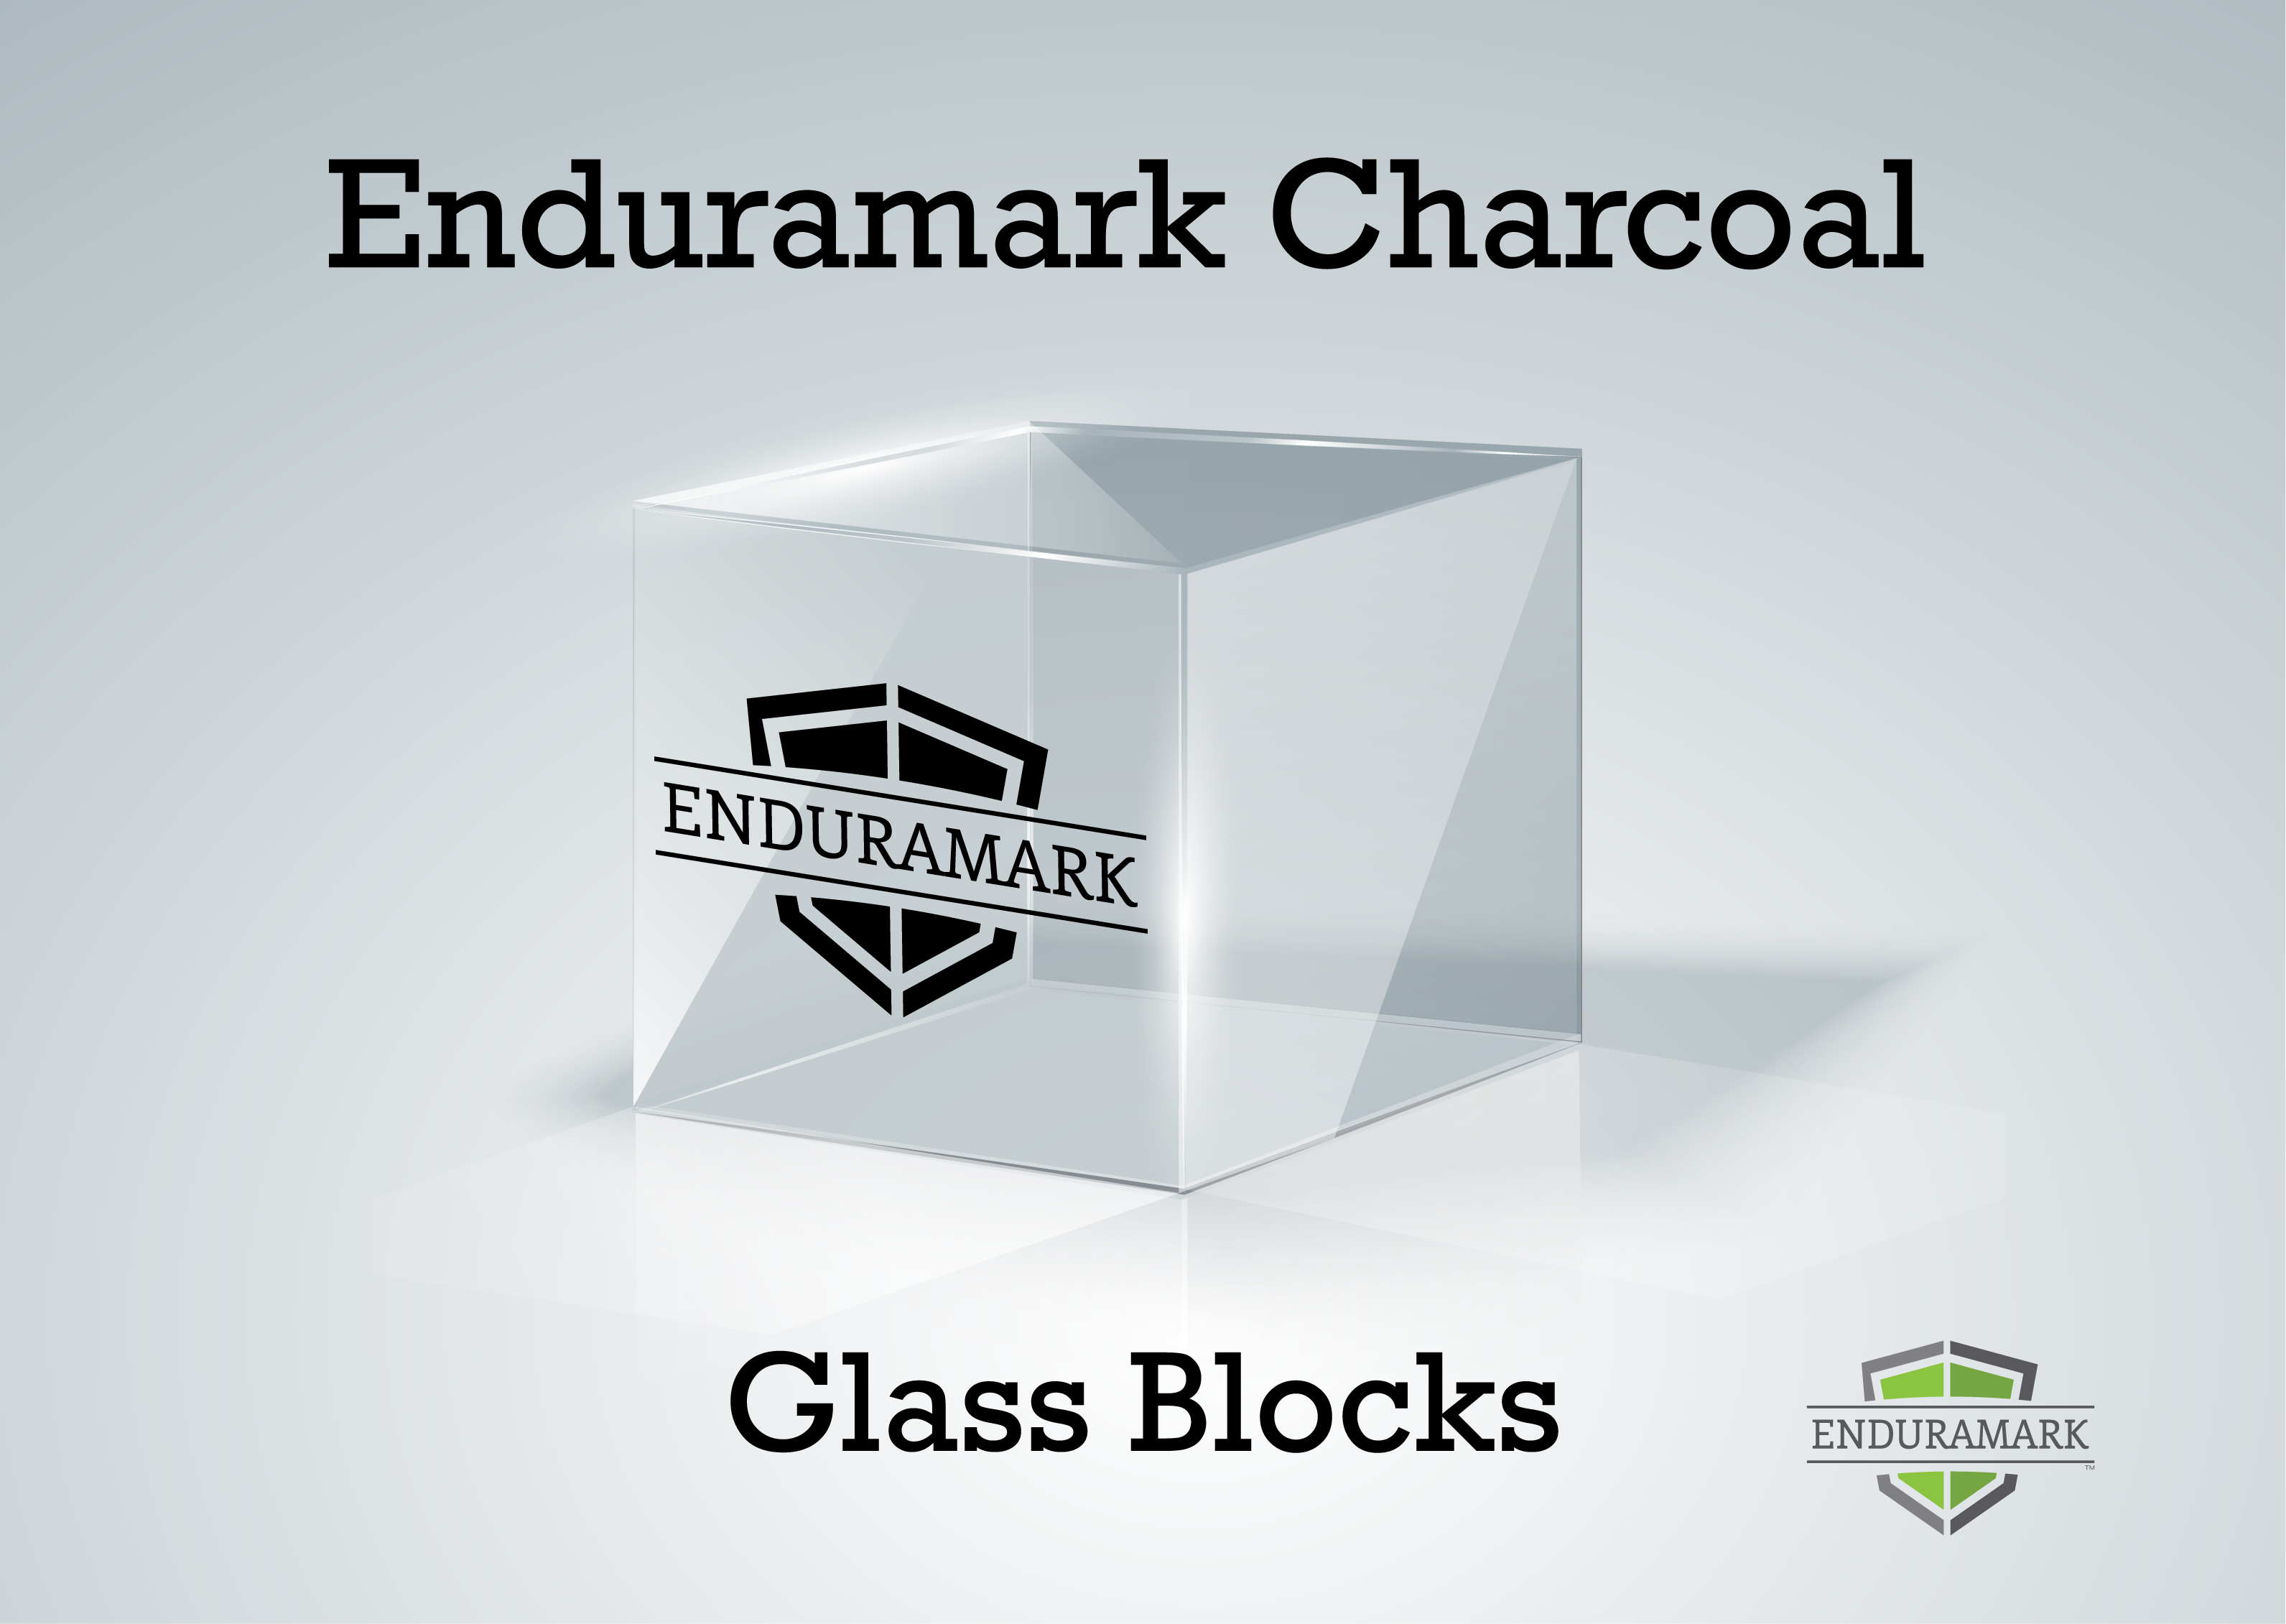 Marking Glass Blocks with Enduramark Charcoal